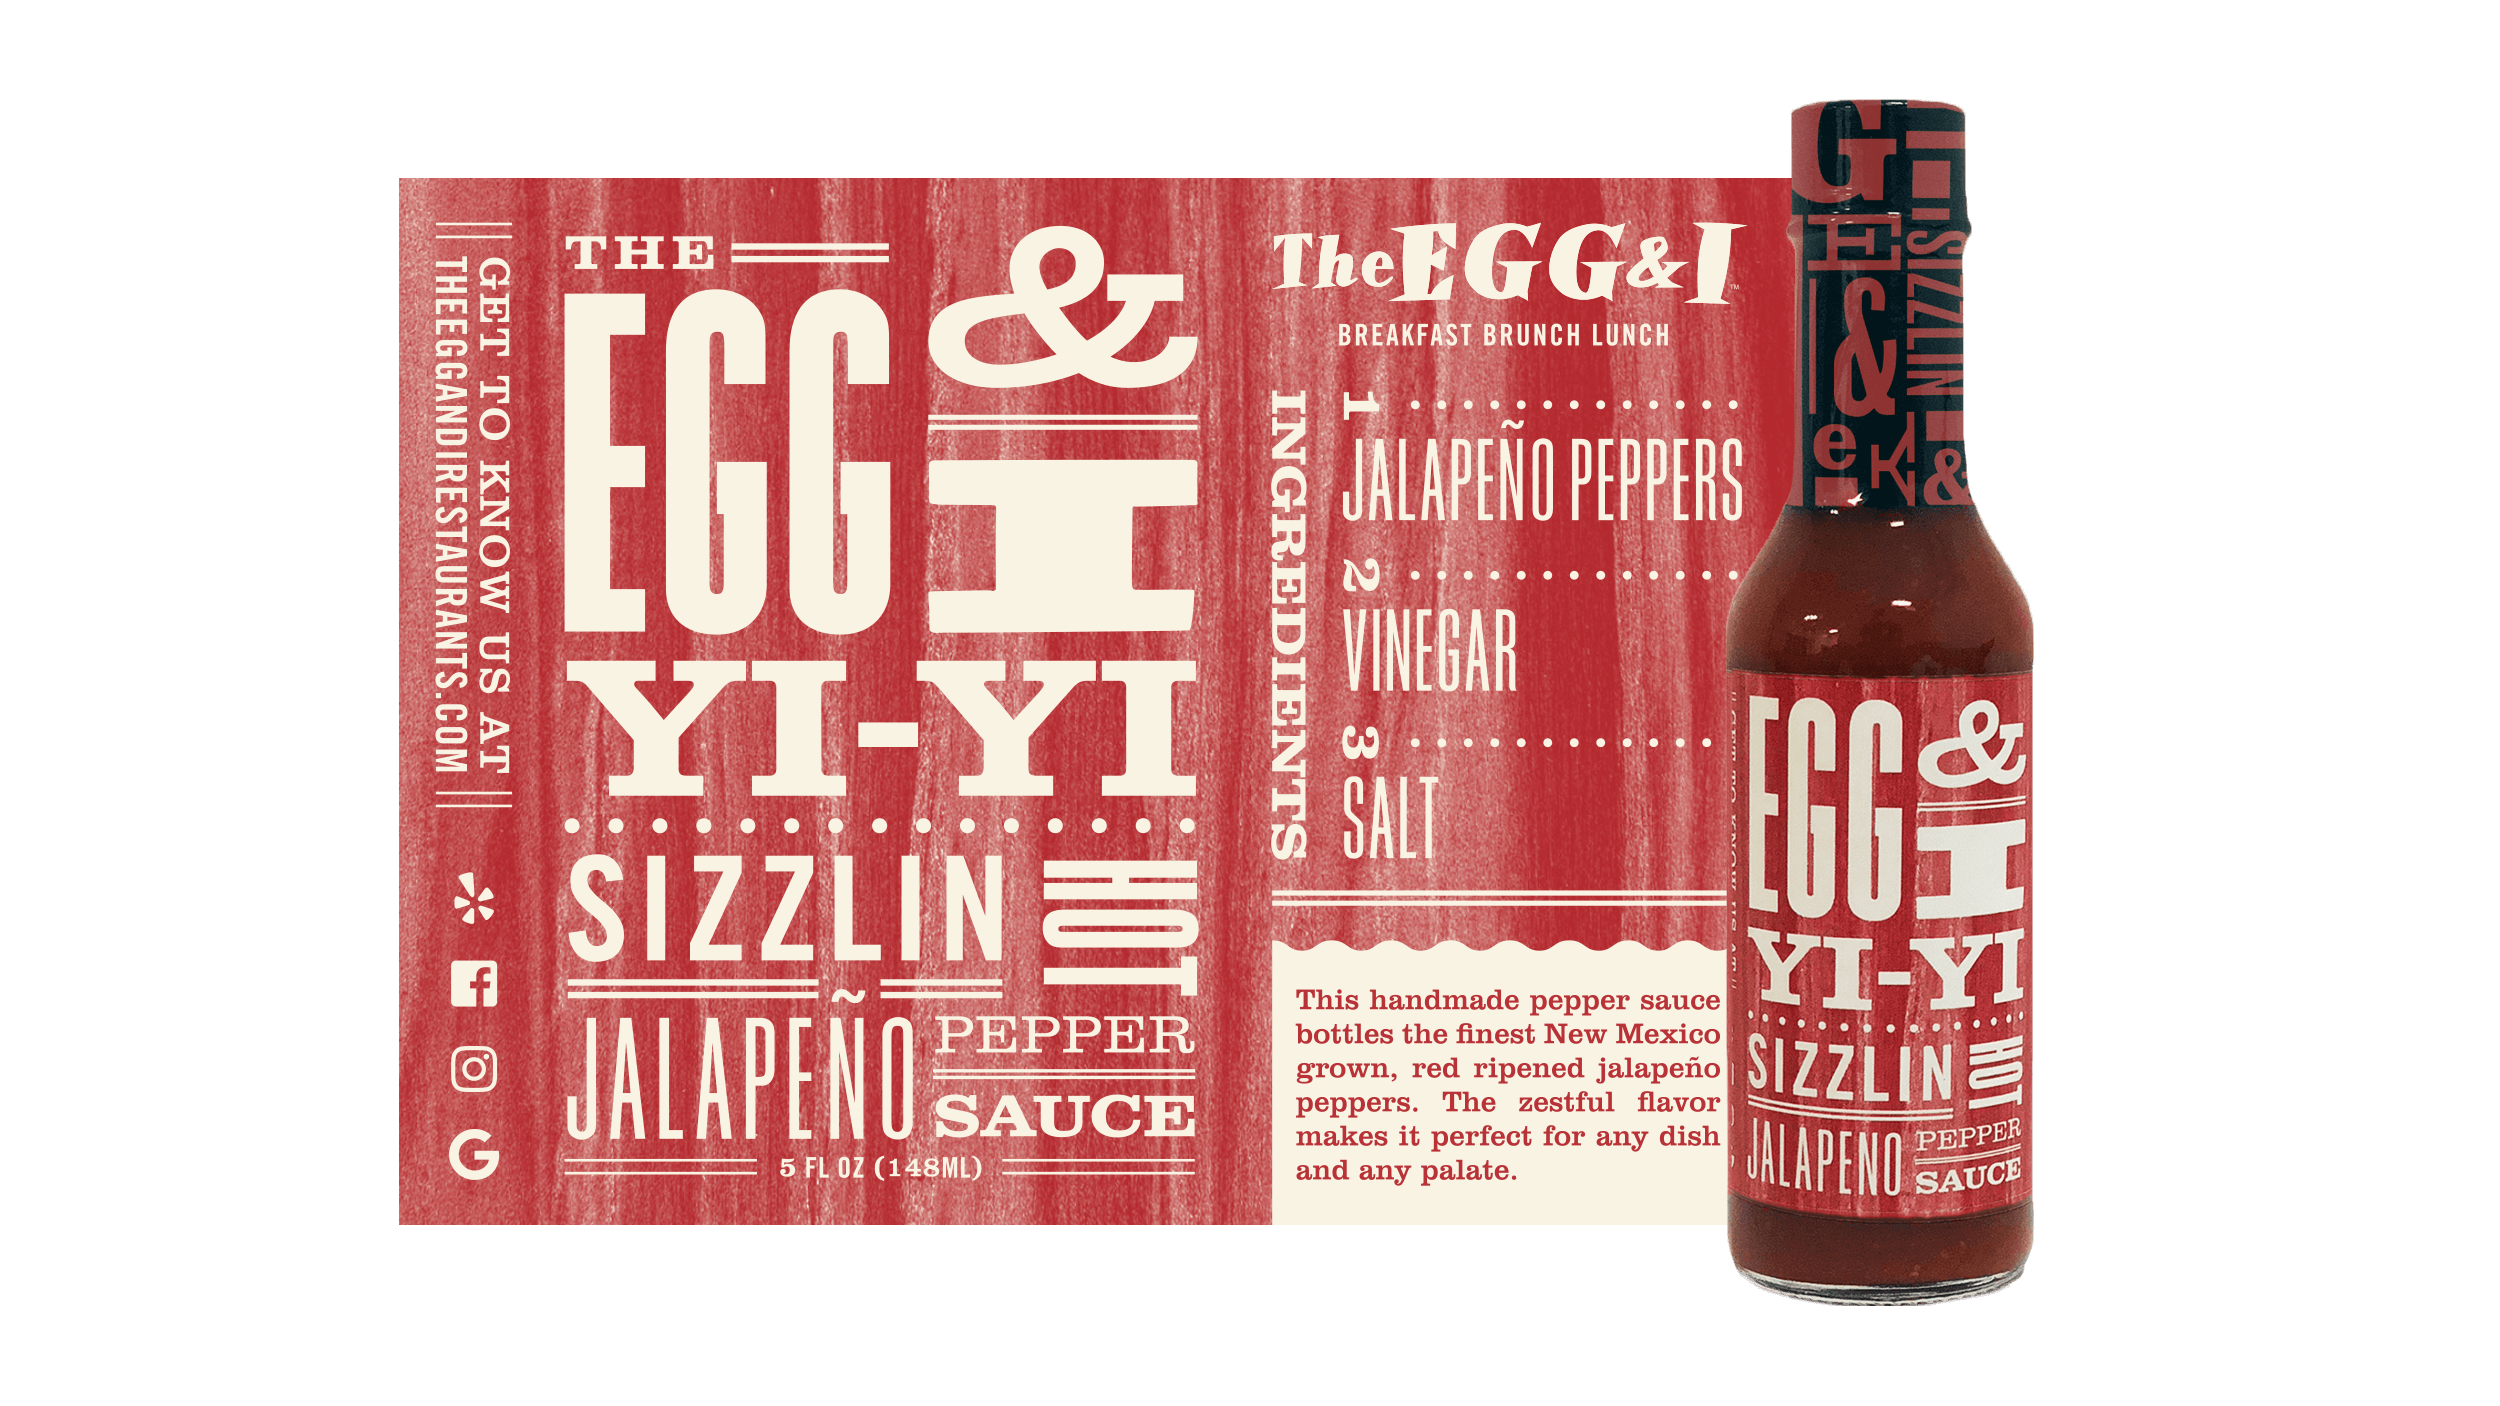 Packaging design for The Egg & I Yi-Yi hot sauce bottle and full label design